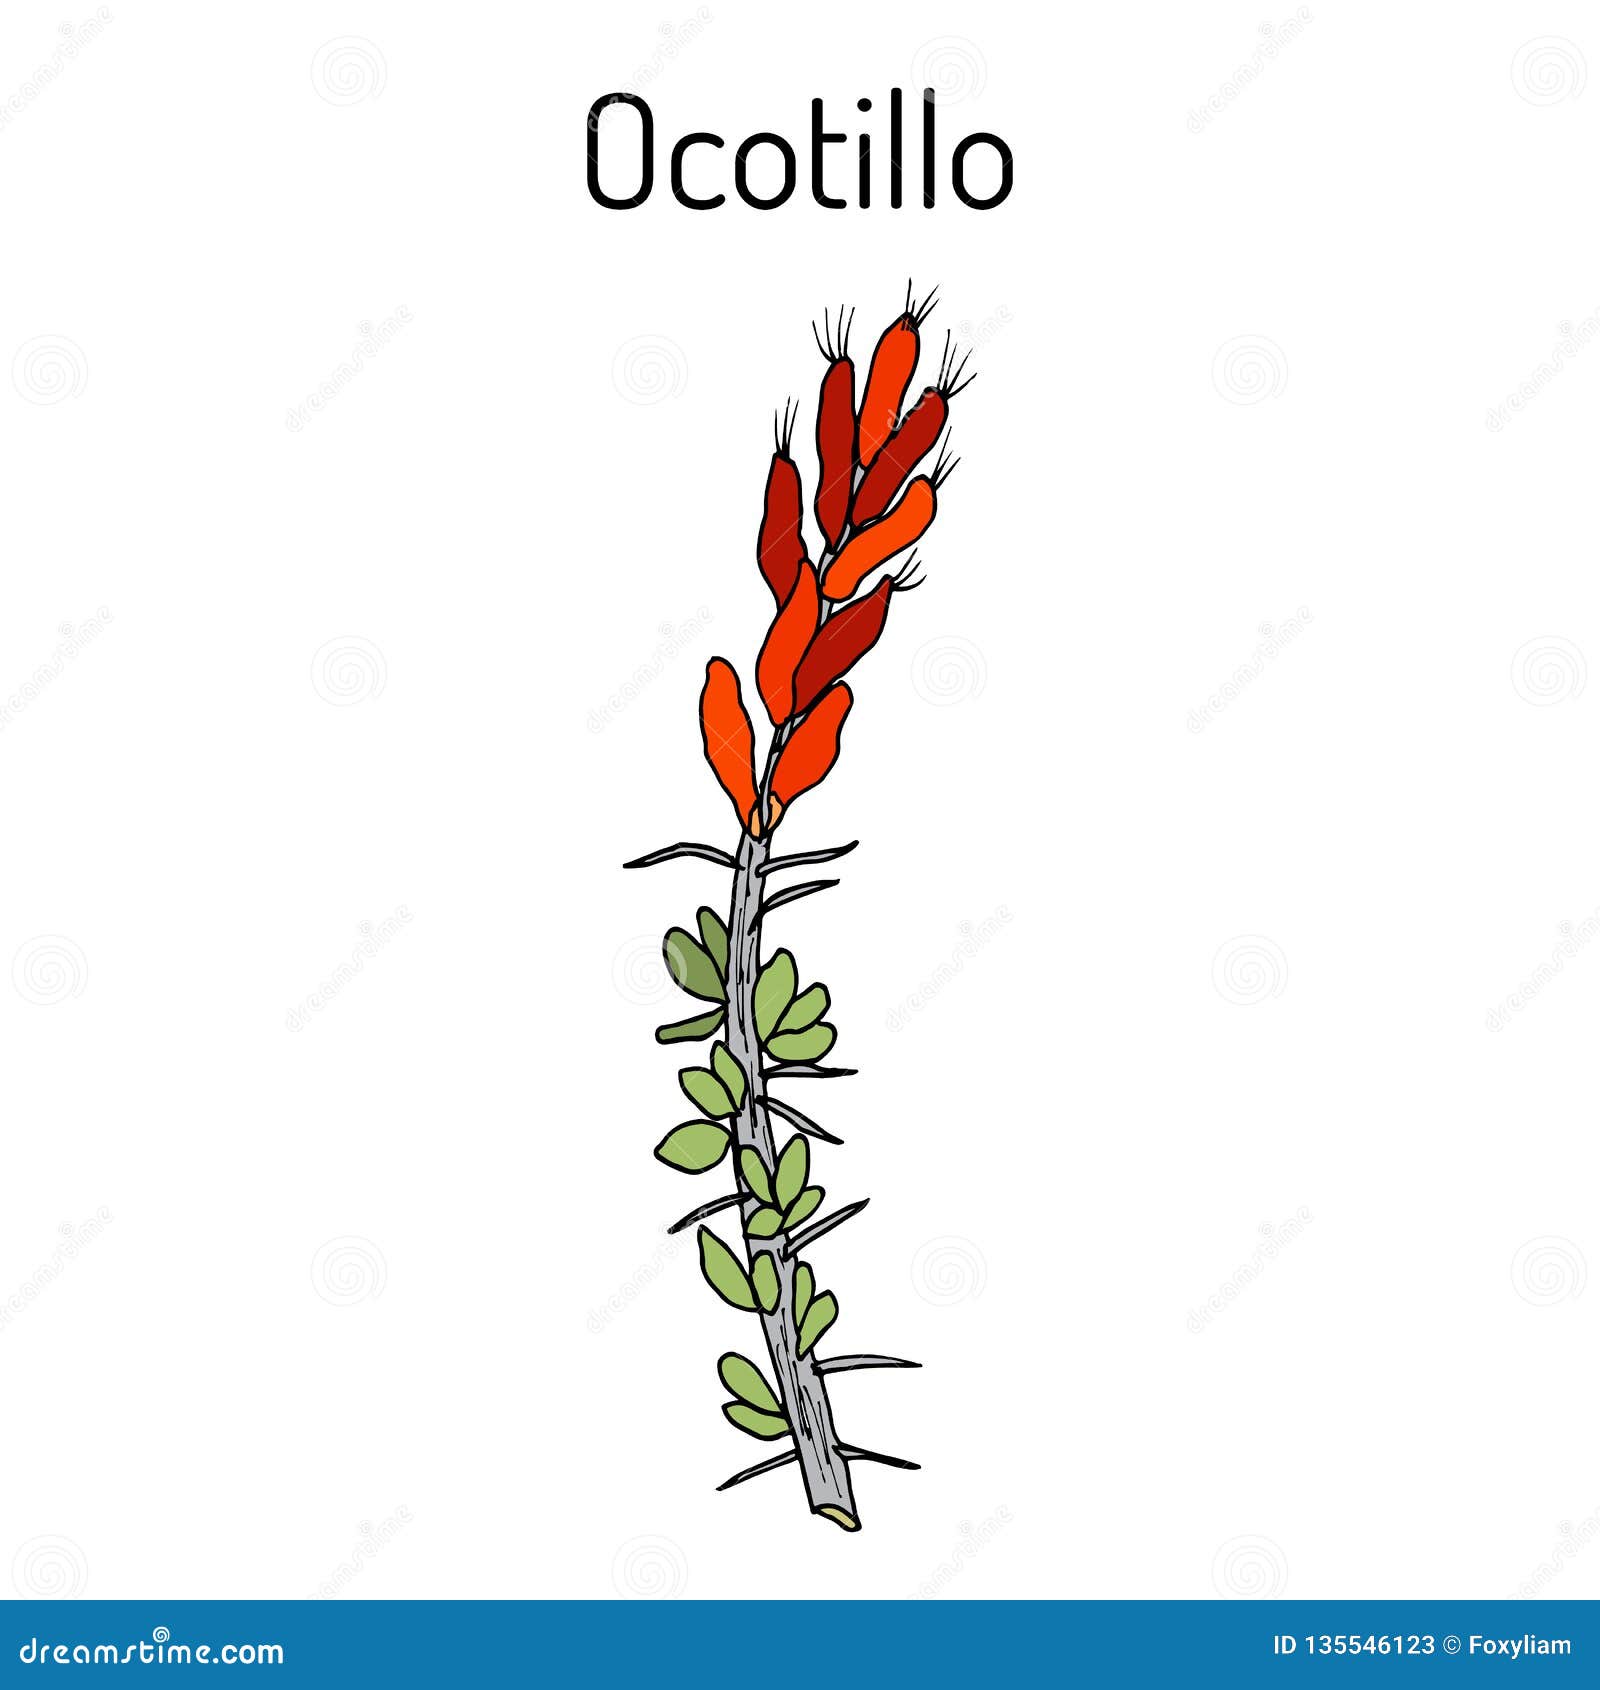 ocotillo fouquieria splendens , or coachwhip, candlewood, slimwood, desert coral, jacob cactus, medicinal plant